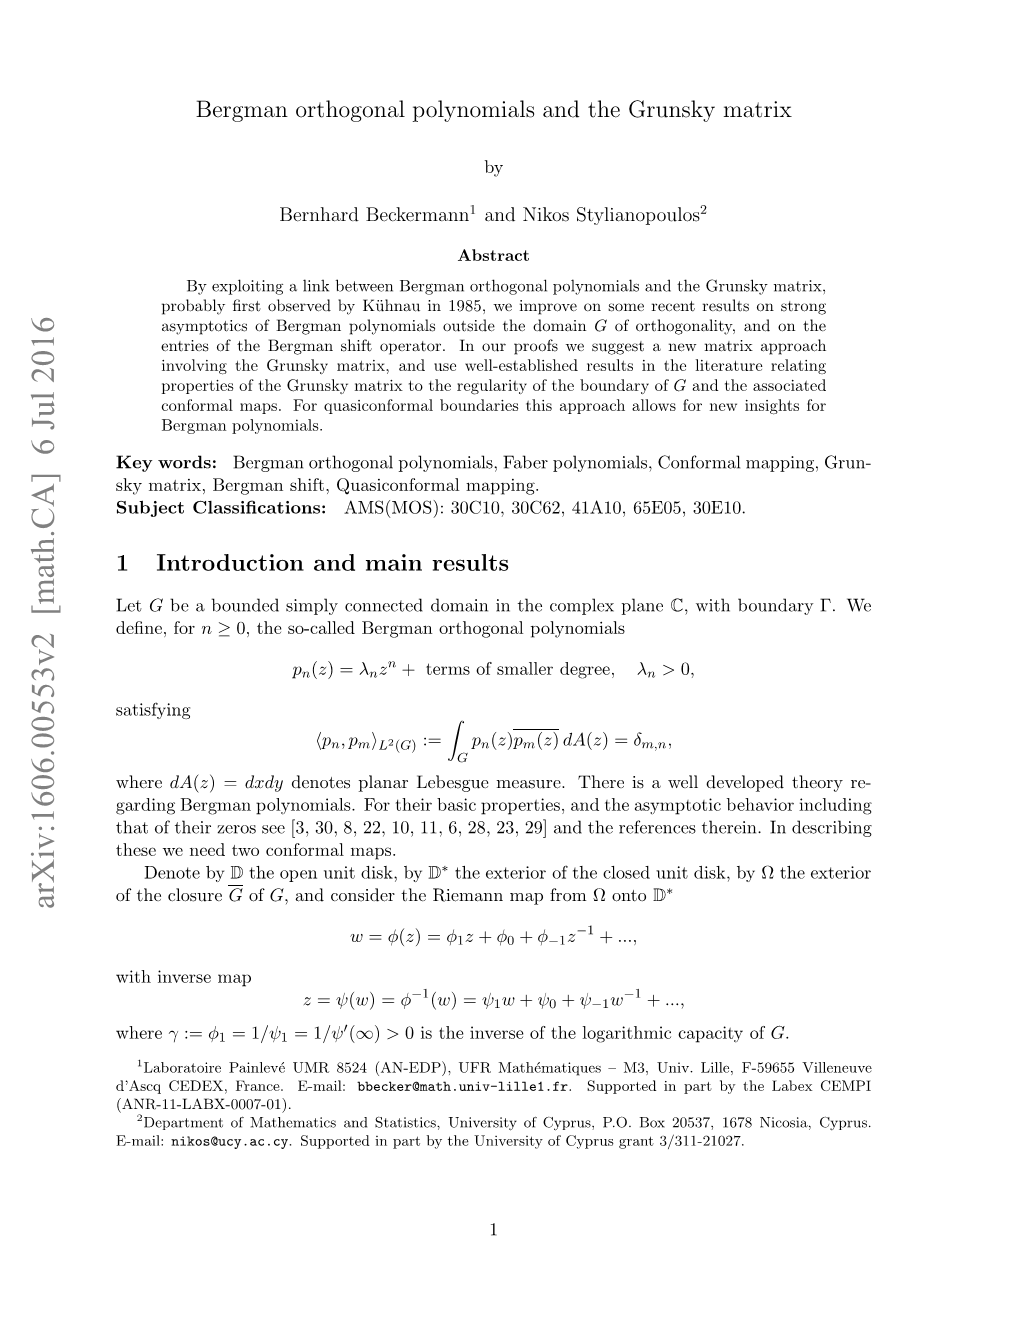 Bergman Orthogonal Polynomials and the Grunsky Matrix